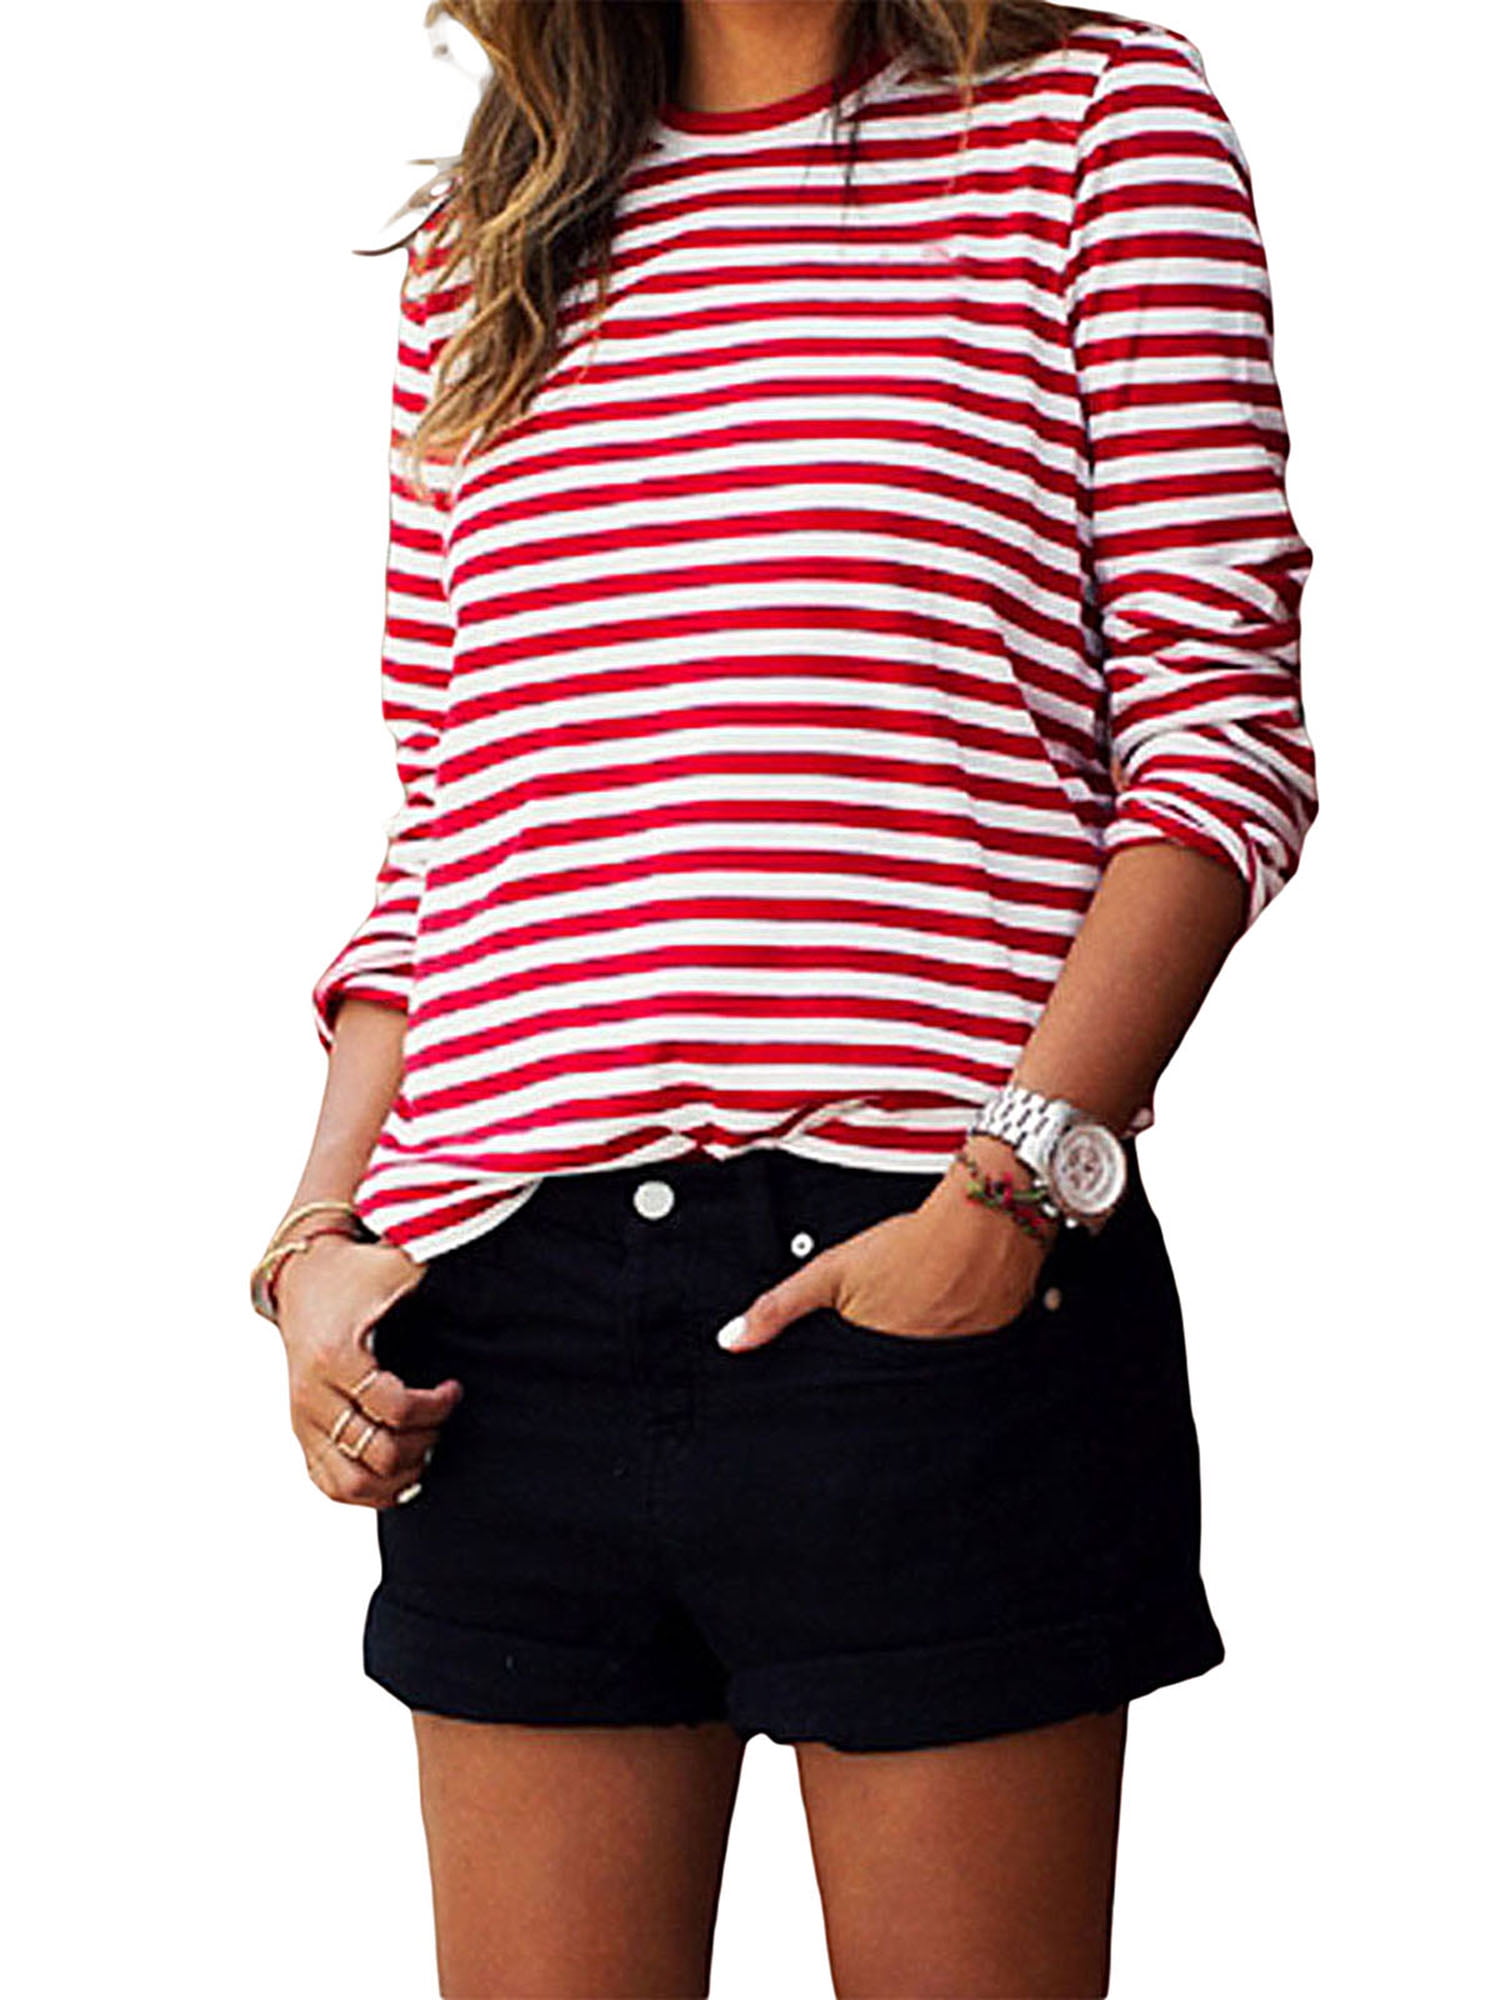 Aftensmad Legitim skruenøgle Thaisu Women's Red White Striped T-Shirt Tops Basic Casual Long Sleeve  Loose Fit T-Shirt Pullovers - Walmart.com